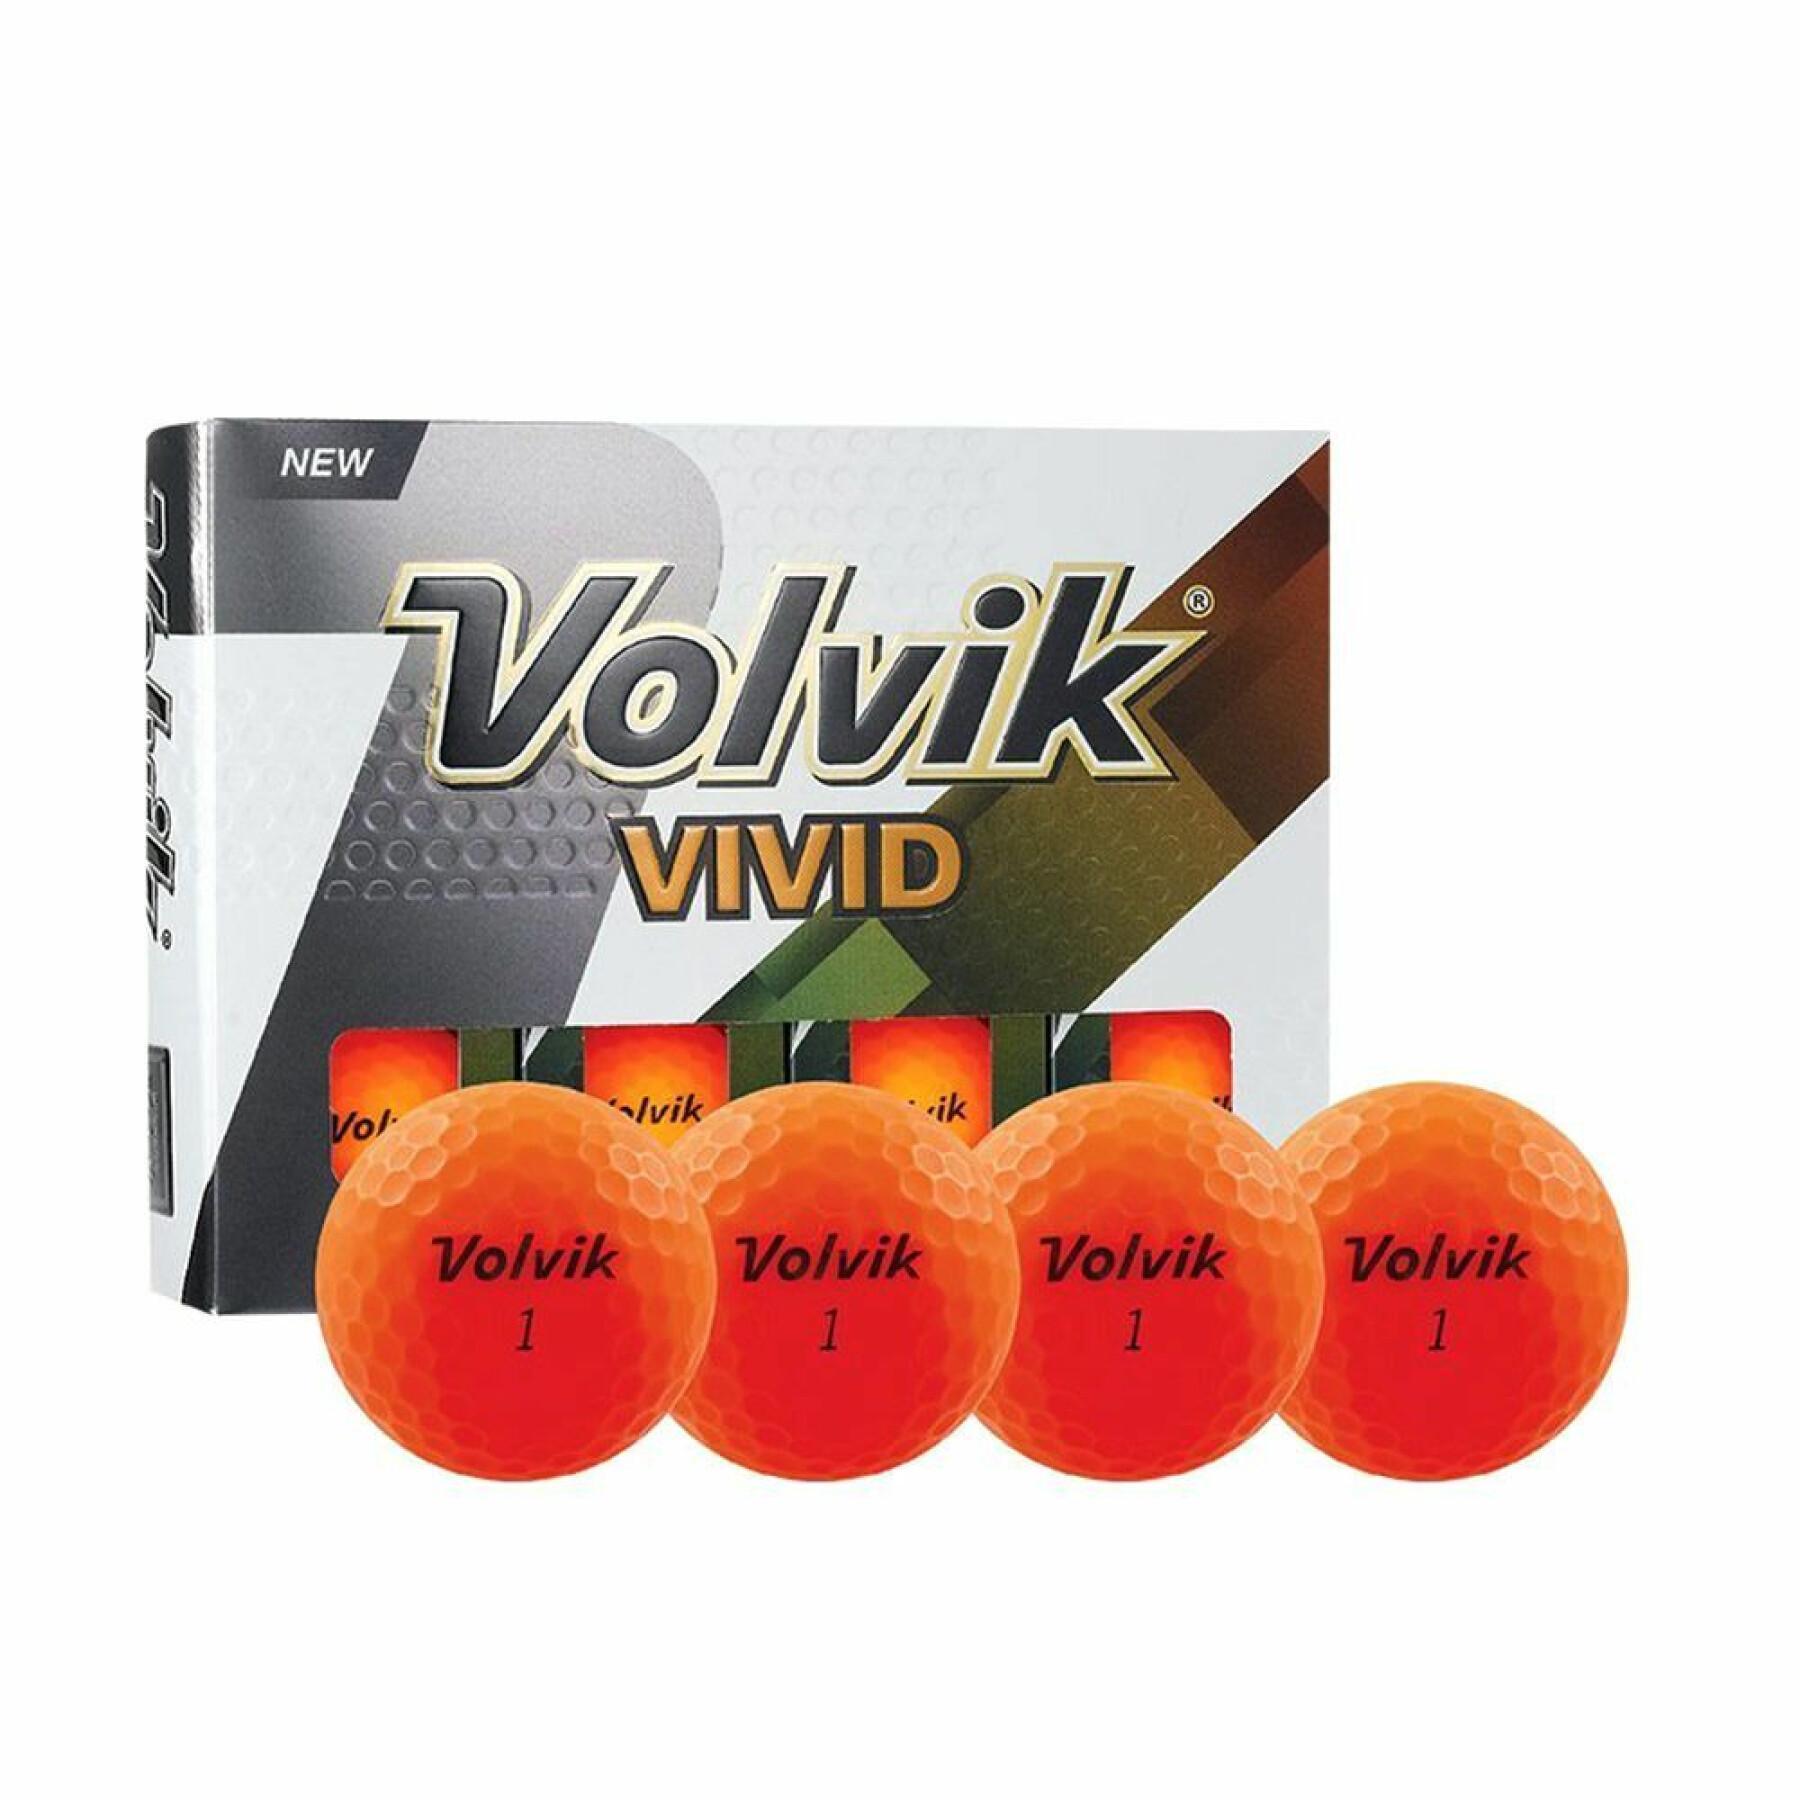 Lot of 12 golf balls Volvik Vivid